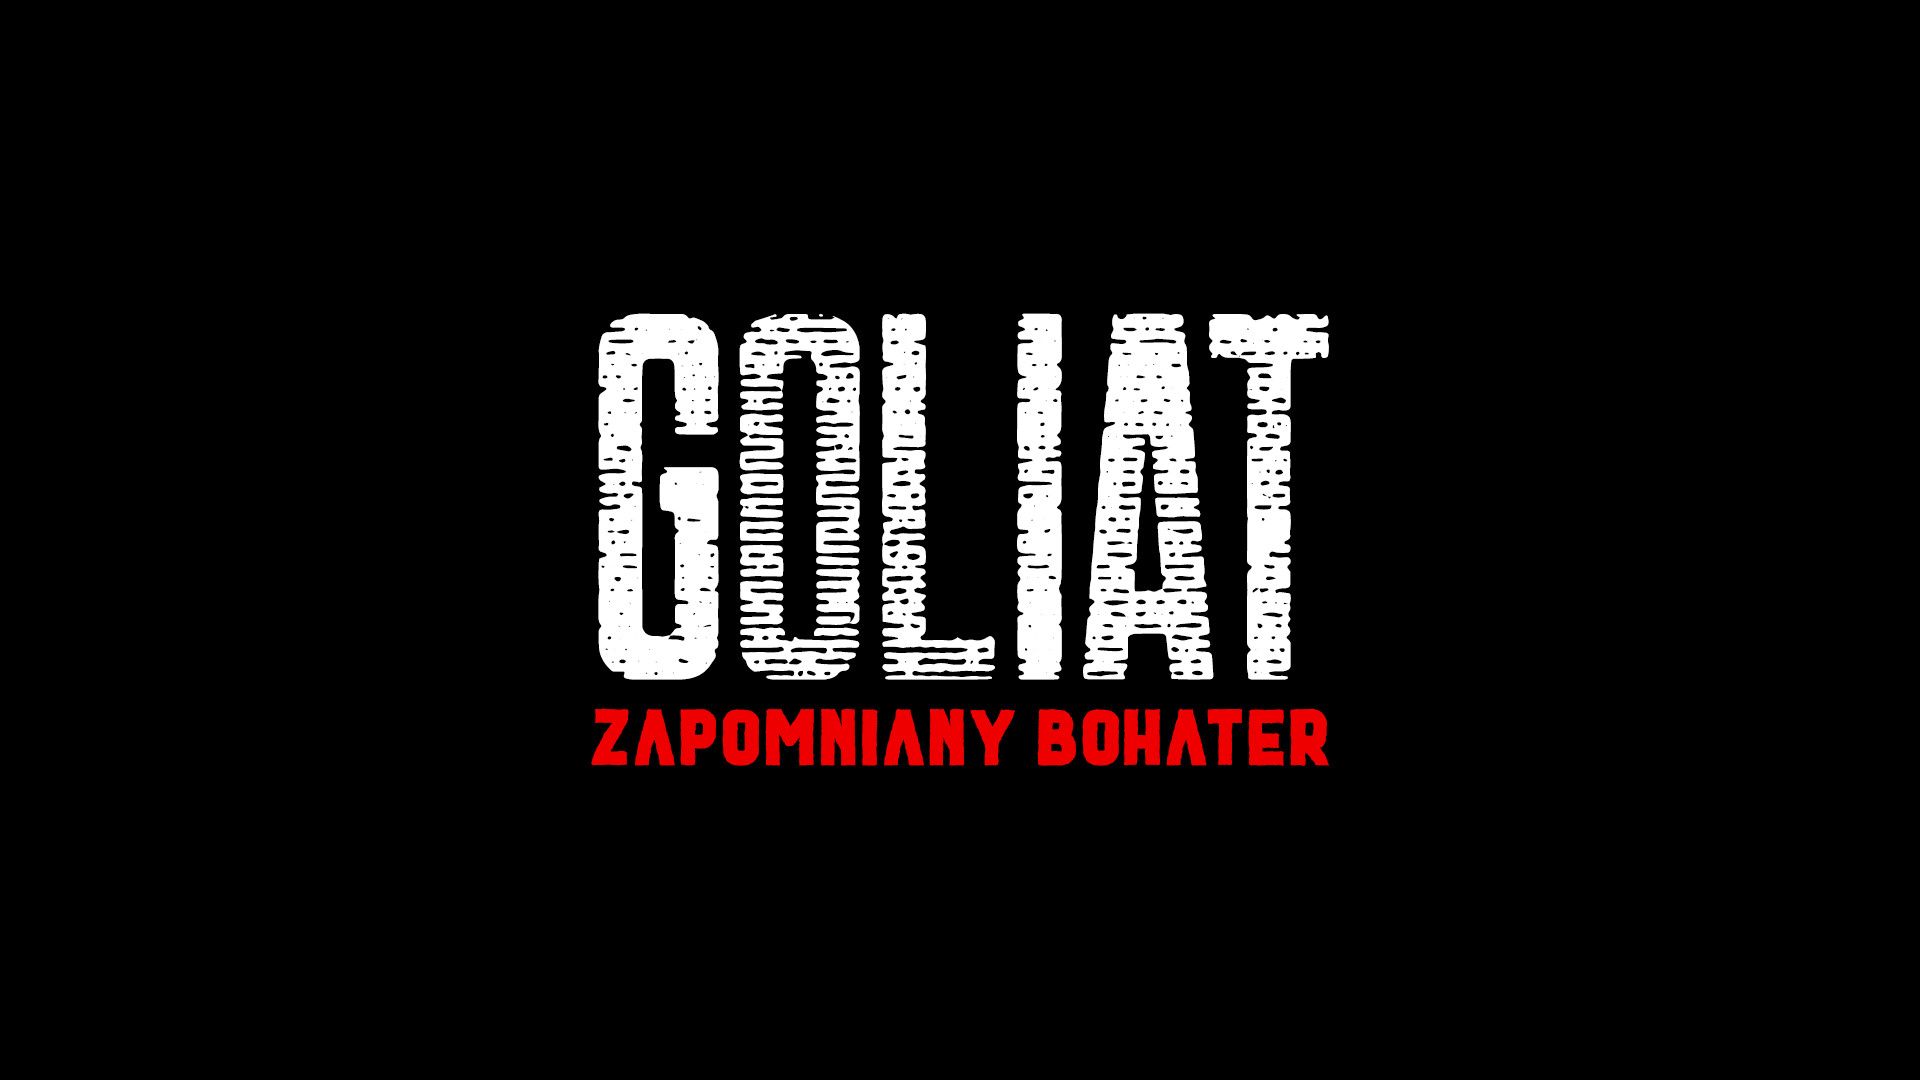 Goliat – The Forgotten Hero